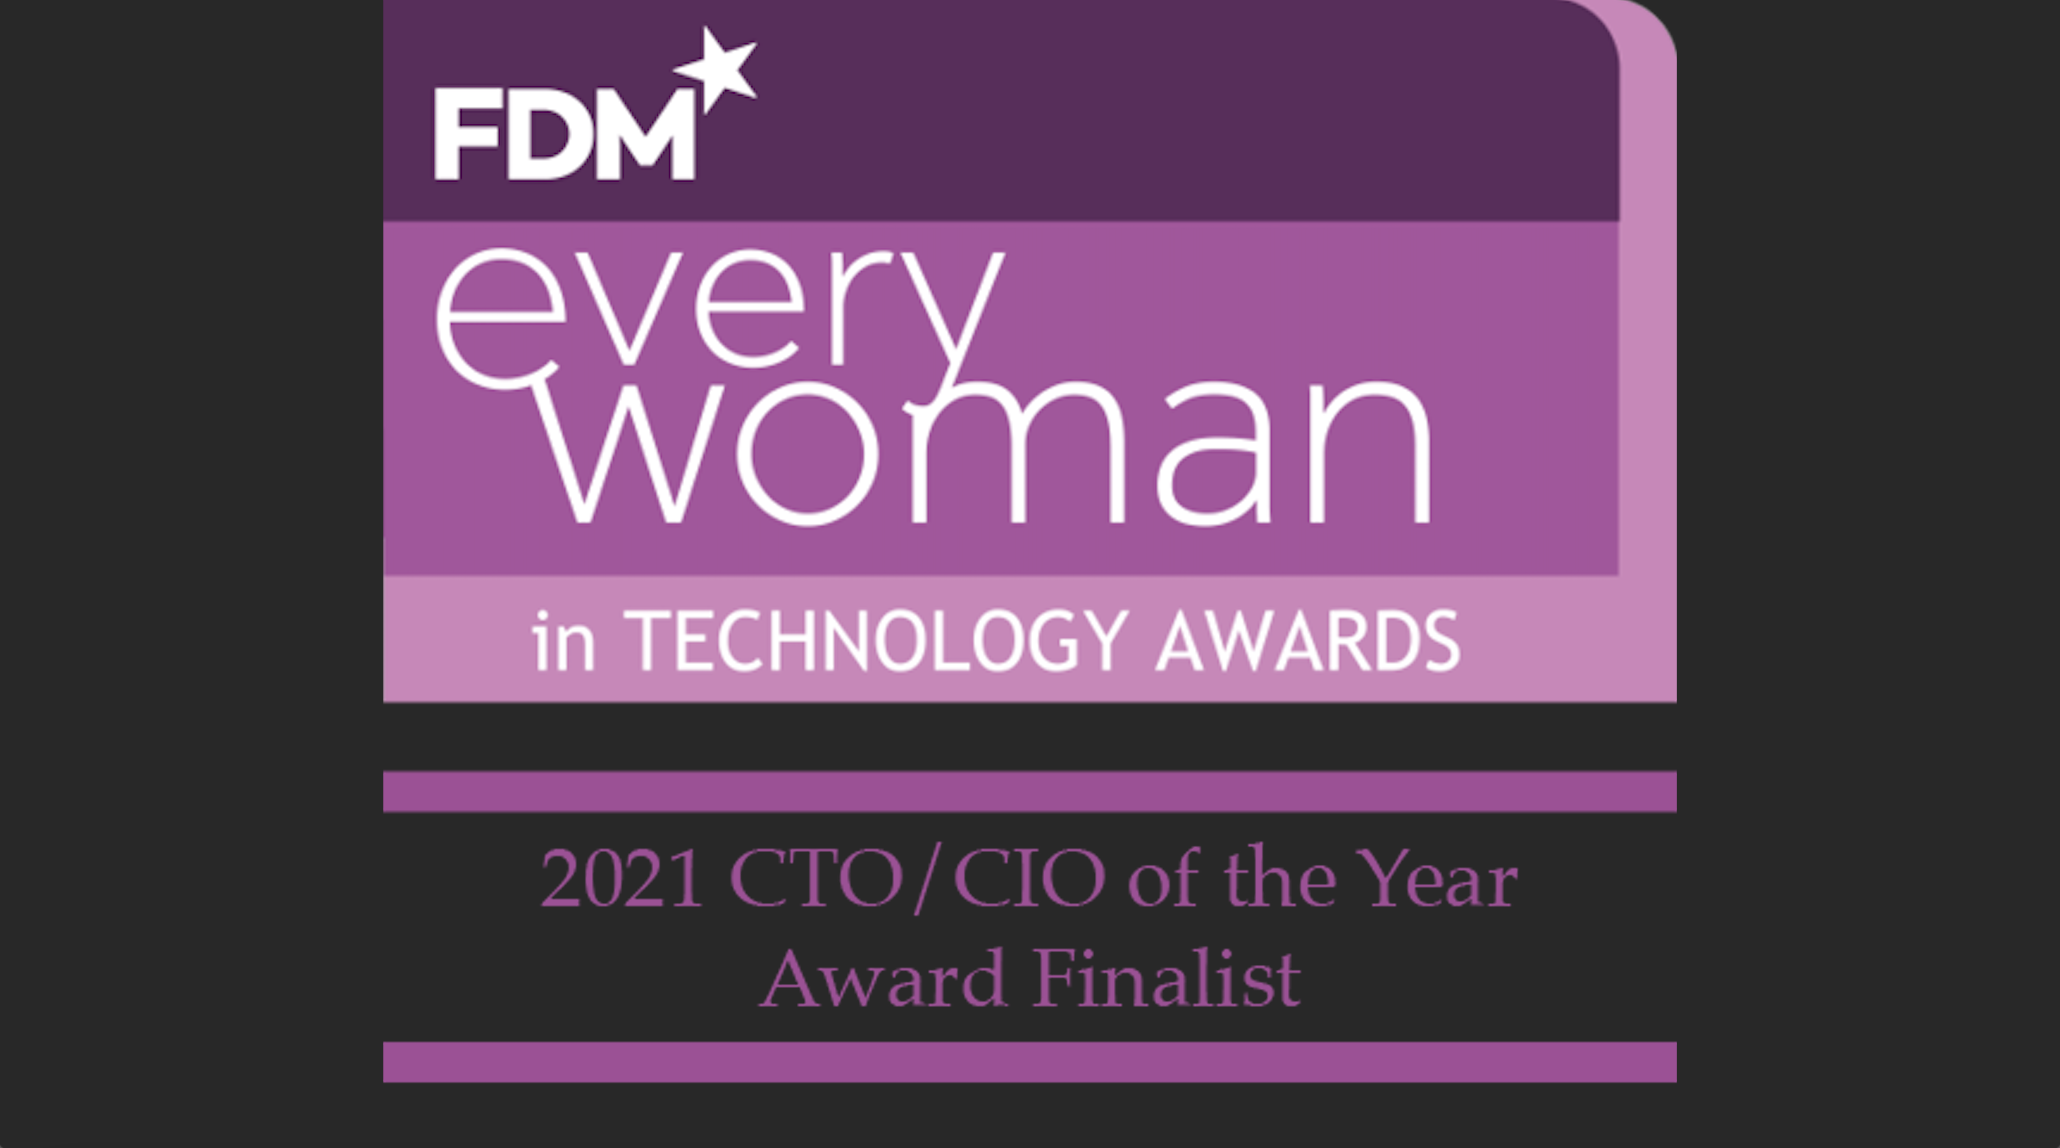 Colette Wyatt is a finalist of CTO/CIO 2021 of FDM everywoman in technology awards